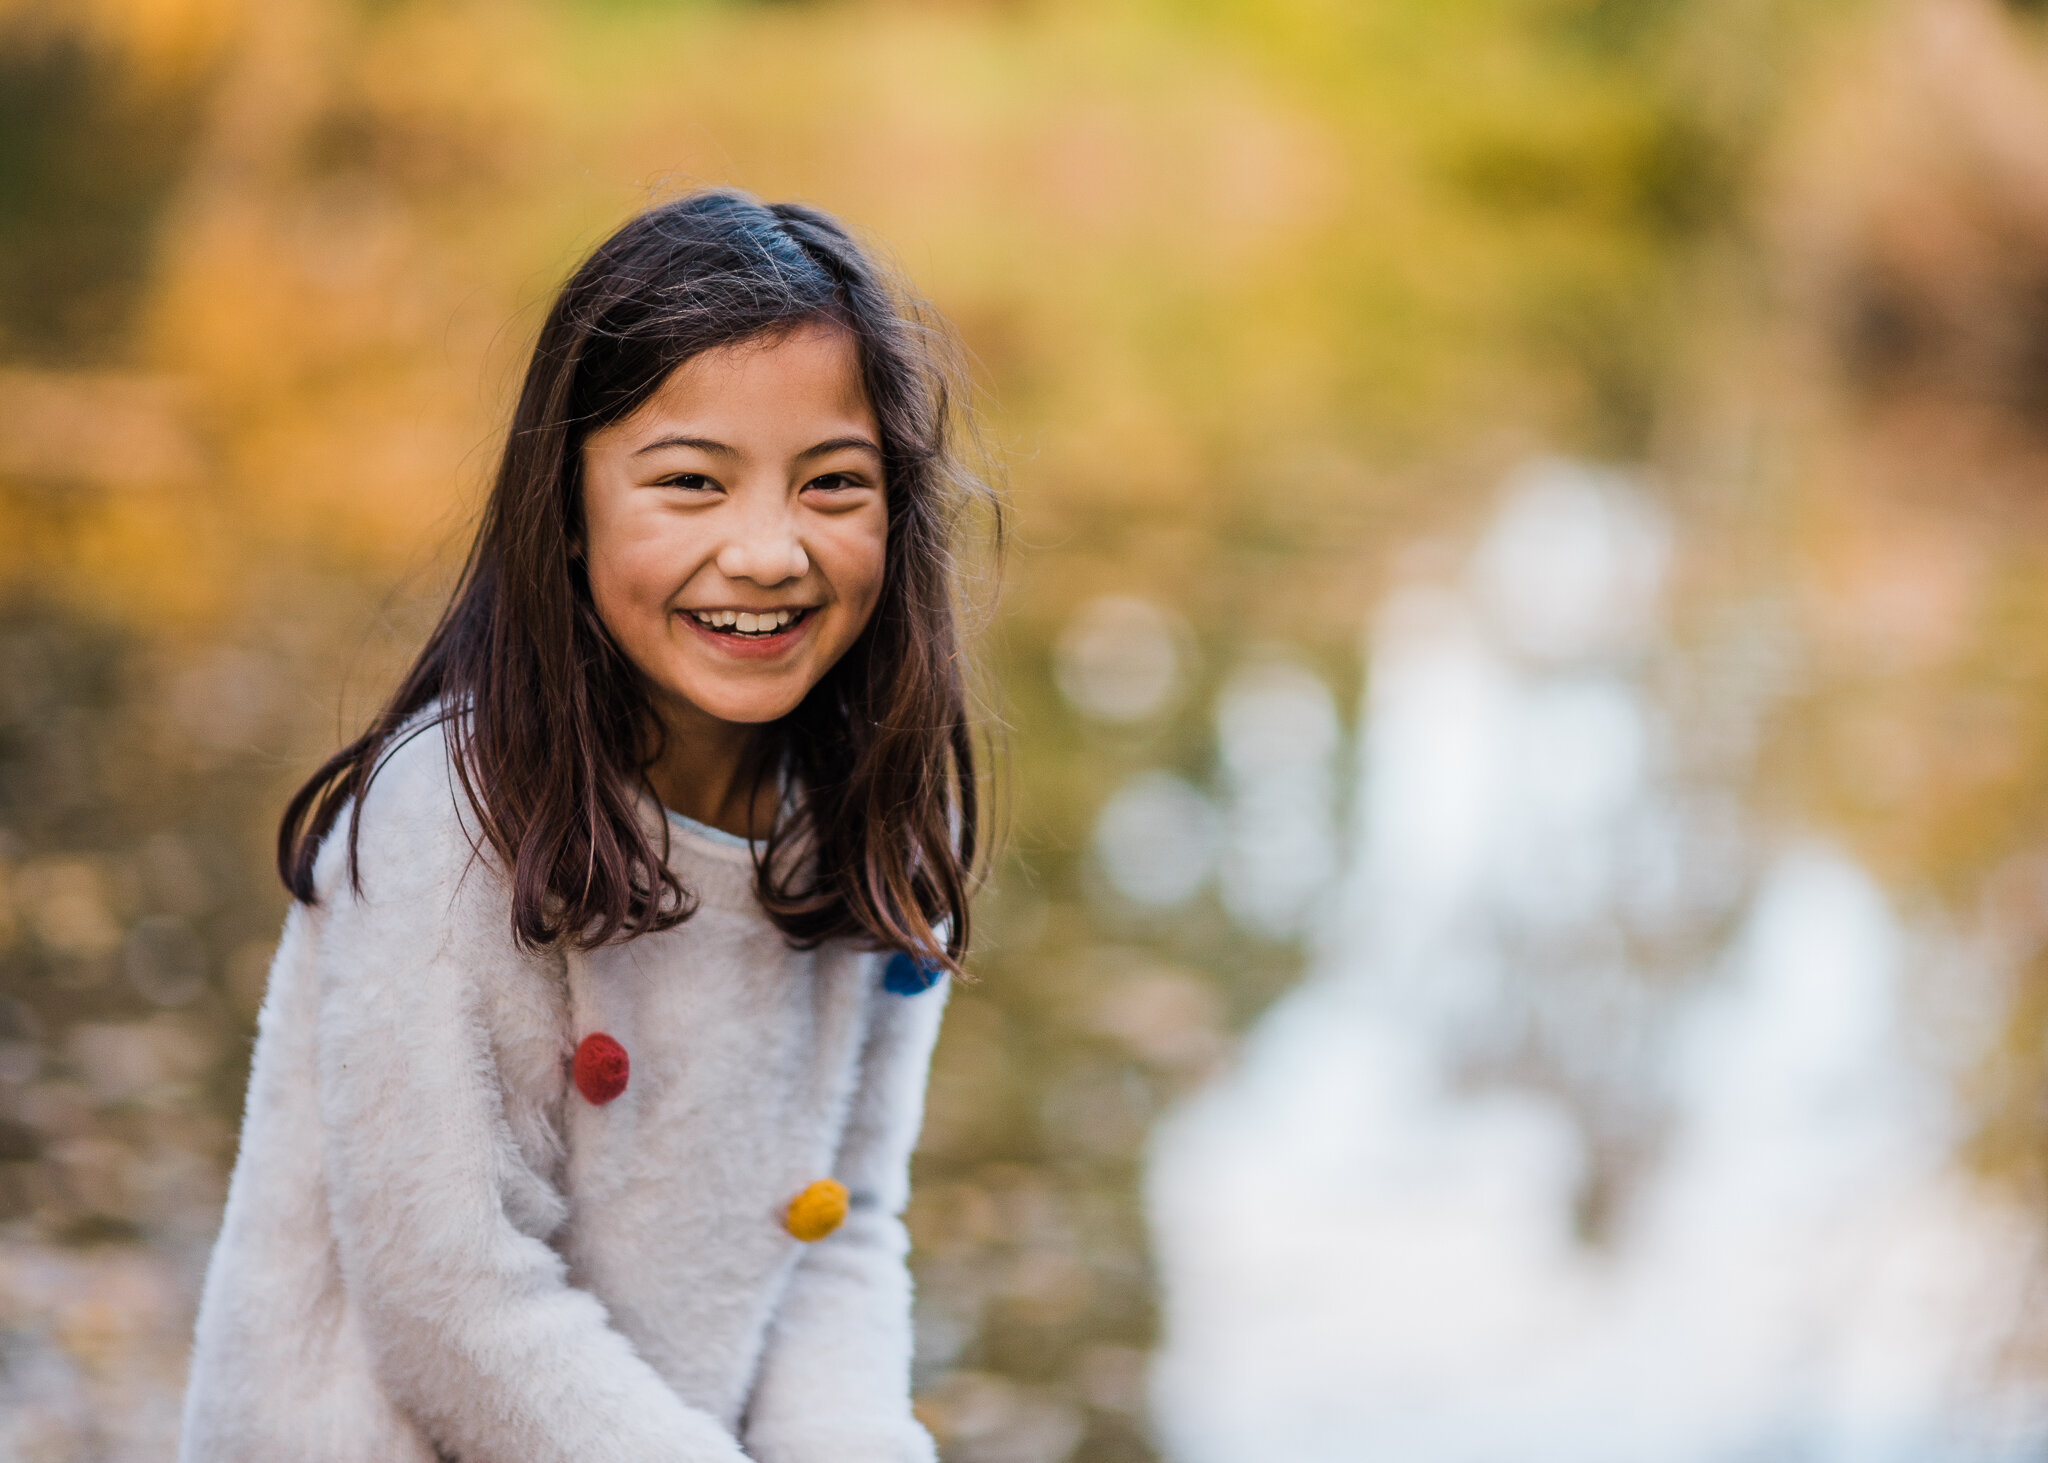 Girl-Smiling-Cotswolds-Autumn Photographer Chui King Li Photography-4169.jpg